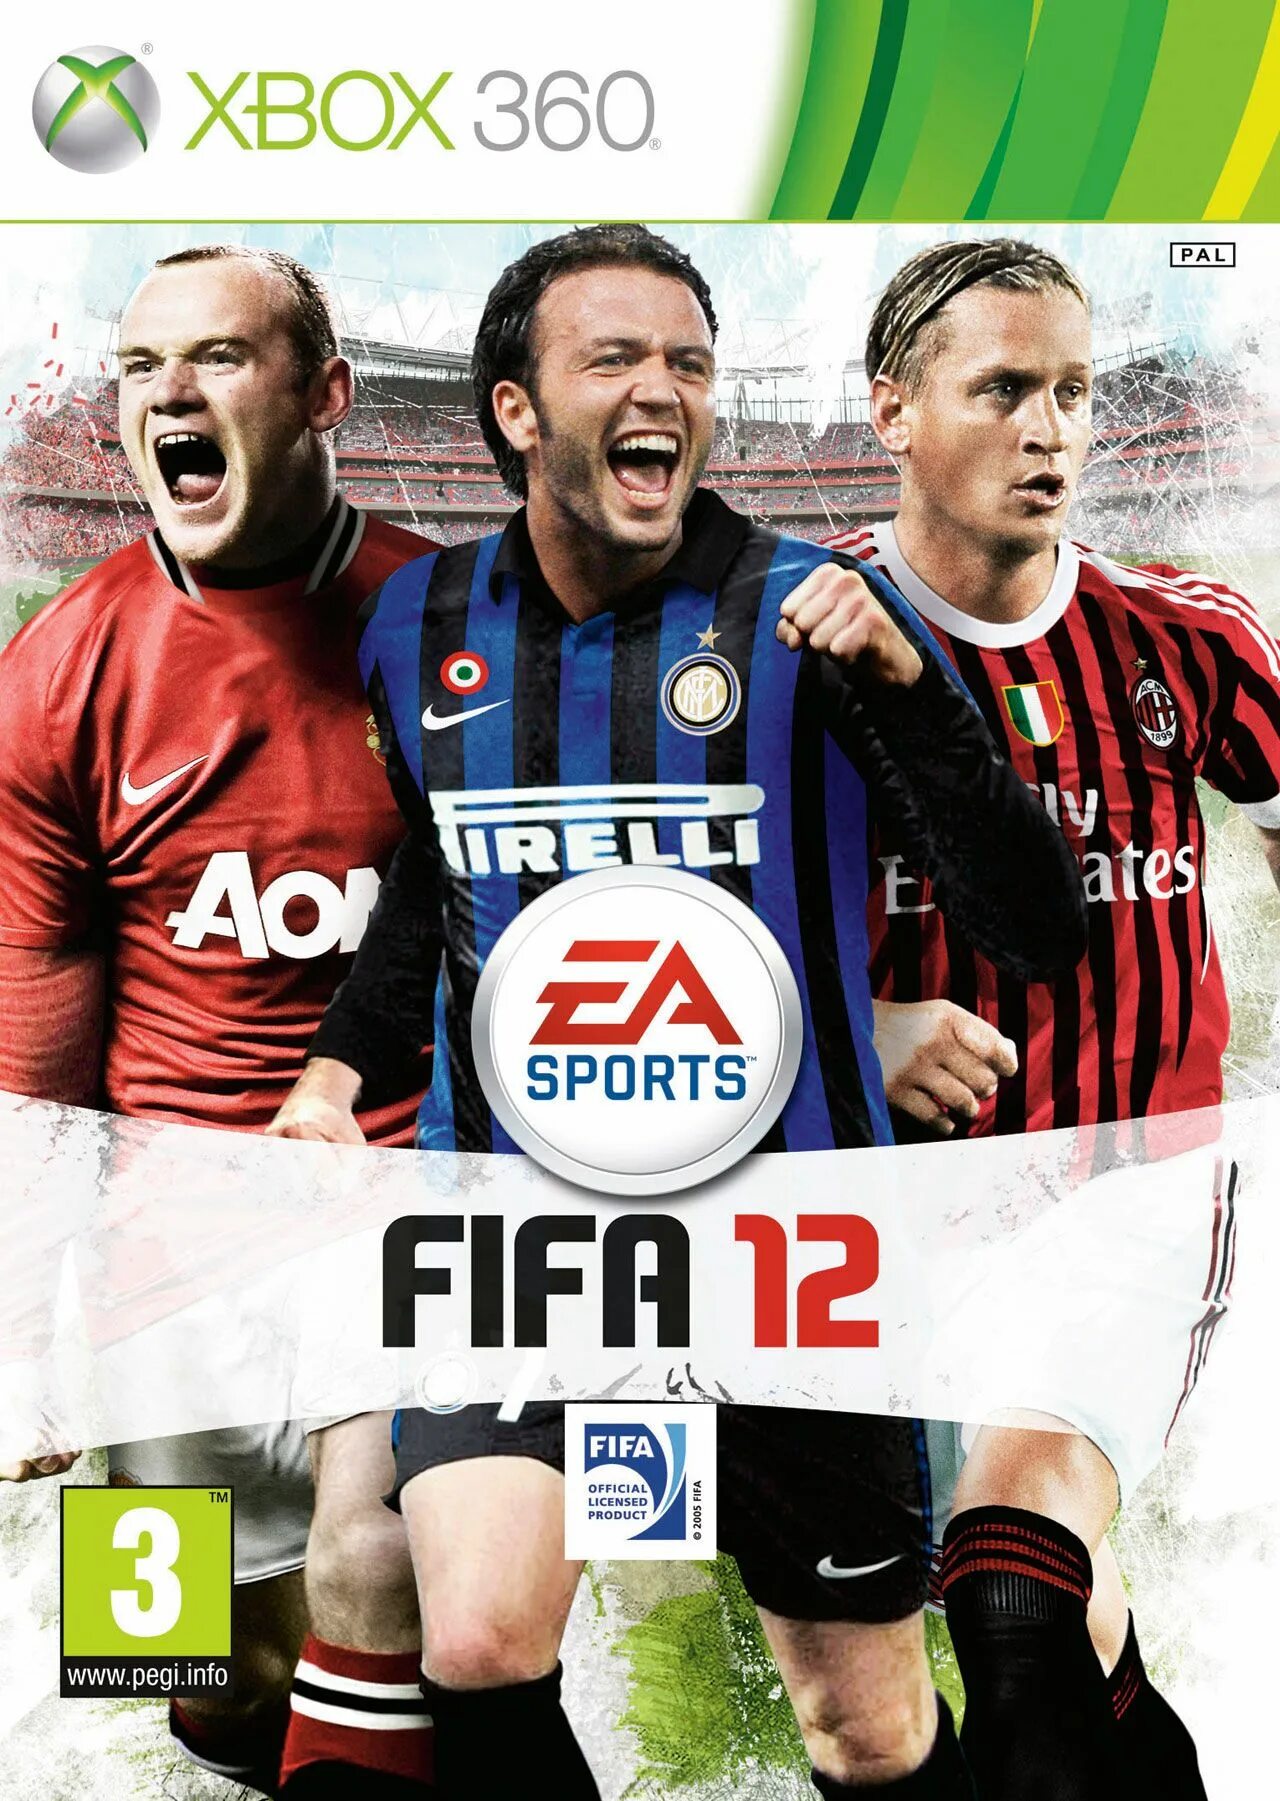 Fifa ost. ФИФА 12 Xbox 360. Игры на Xbox 360 FIFA. Хбокс диск ФИФА 12. ФИФА 12 обложка.